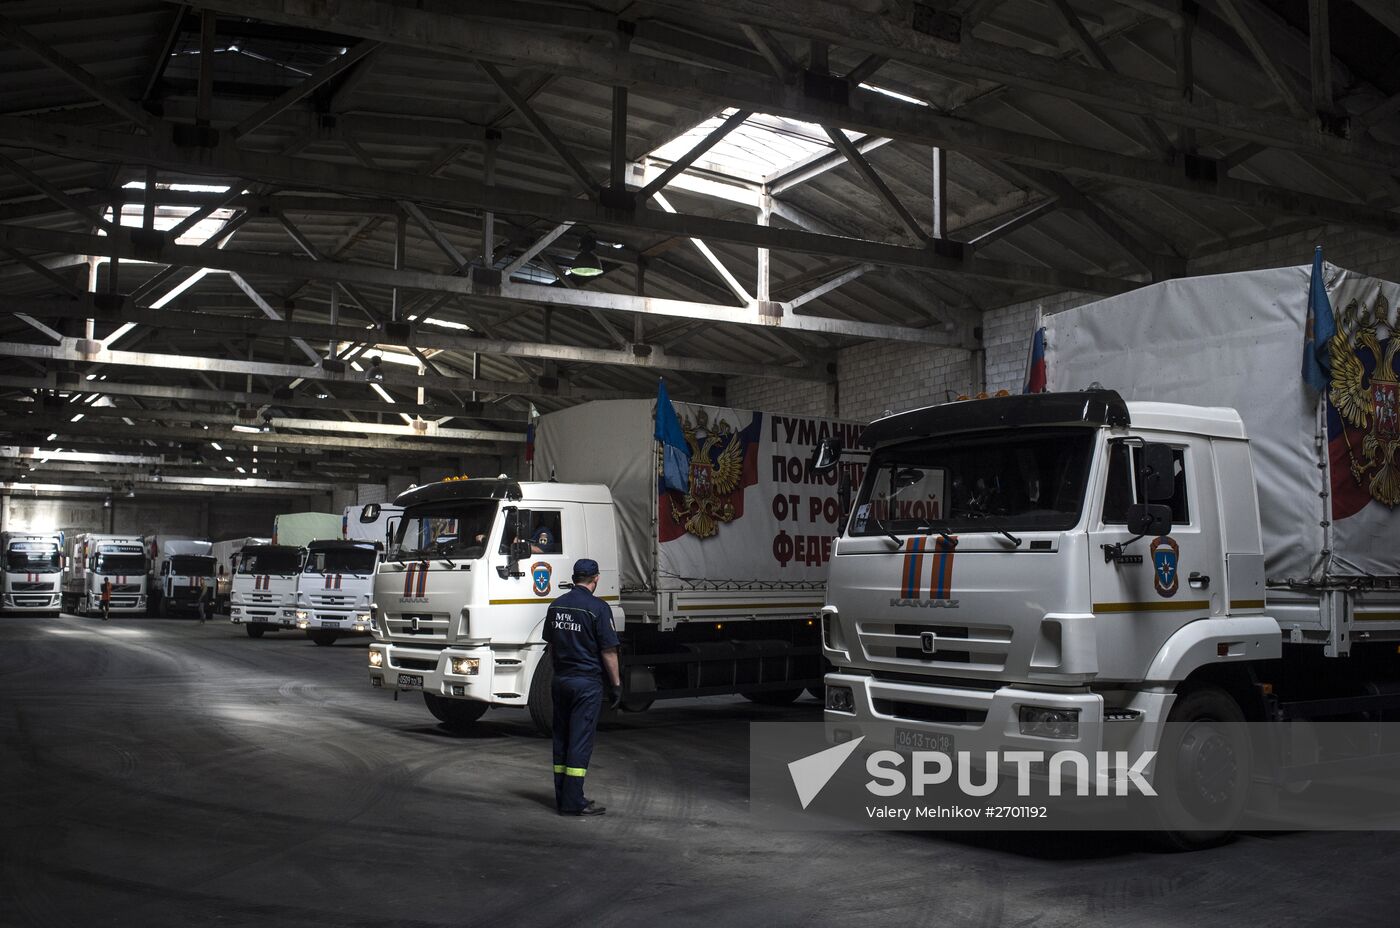 38th humanitarian aid convoy arrives in Donetsk Region